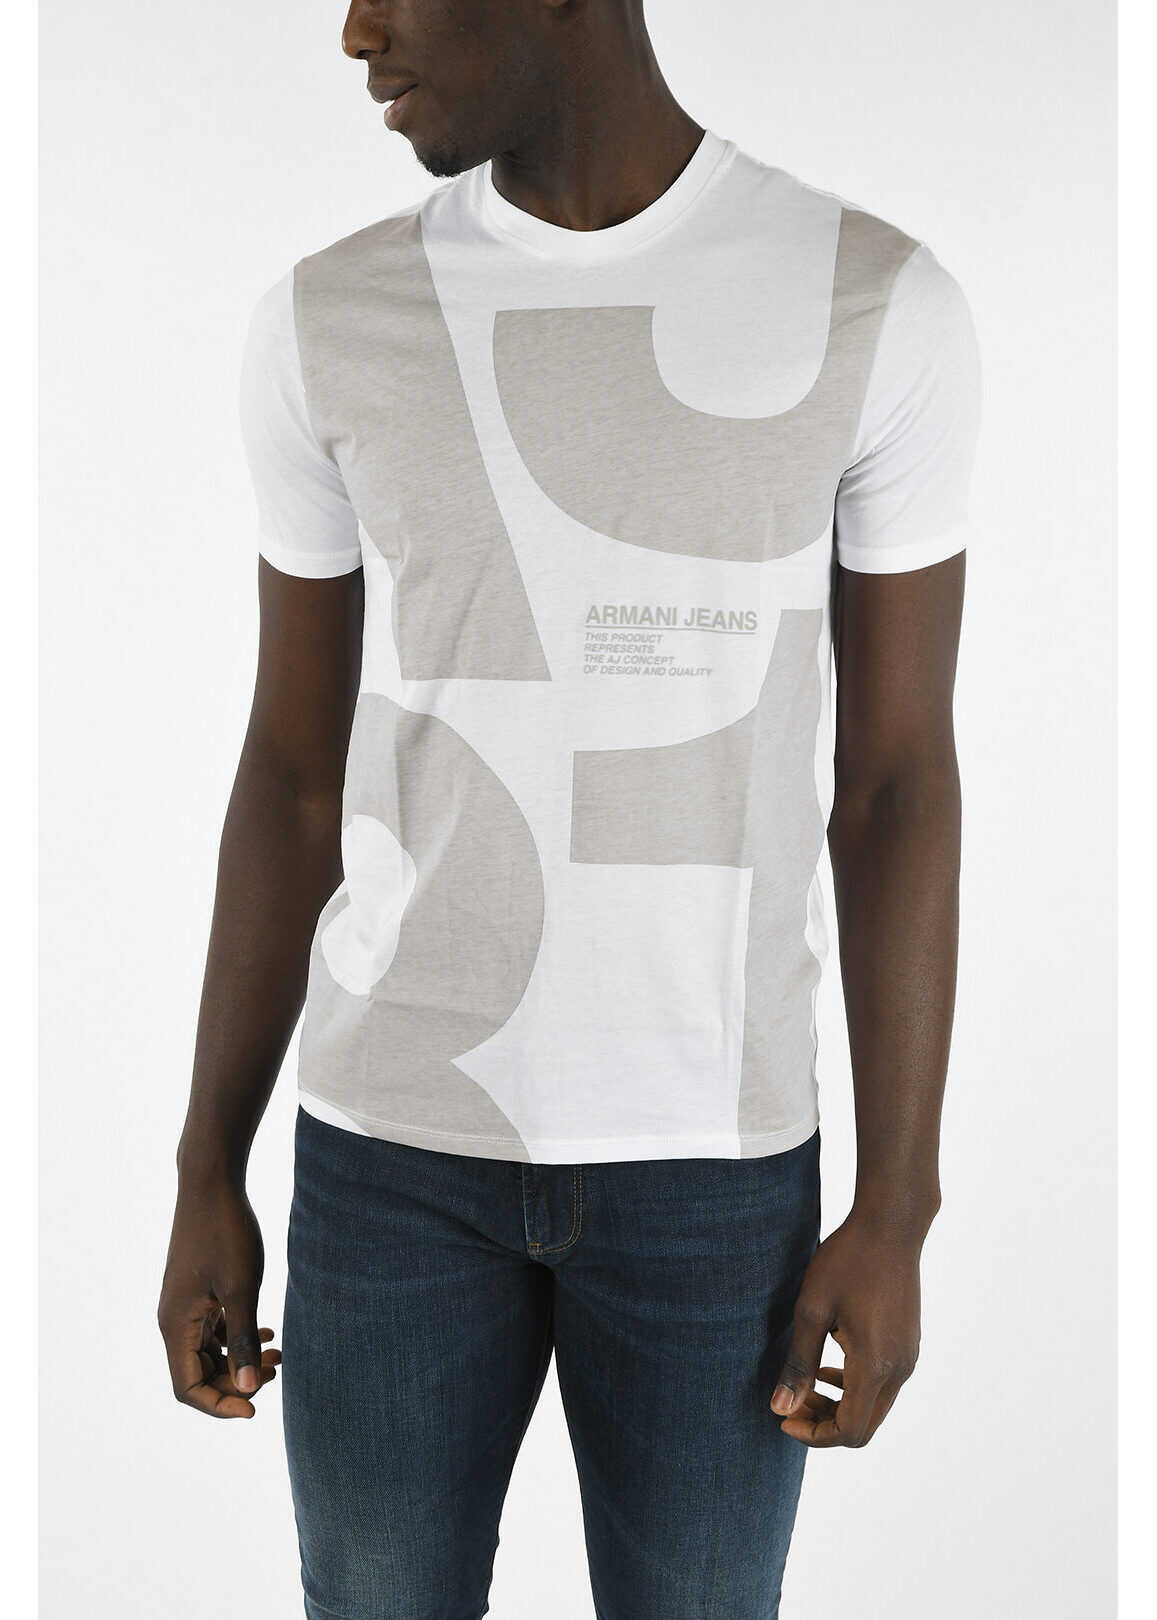 Armani ARMANI JEANS Printed T-shirt* WHITE